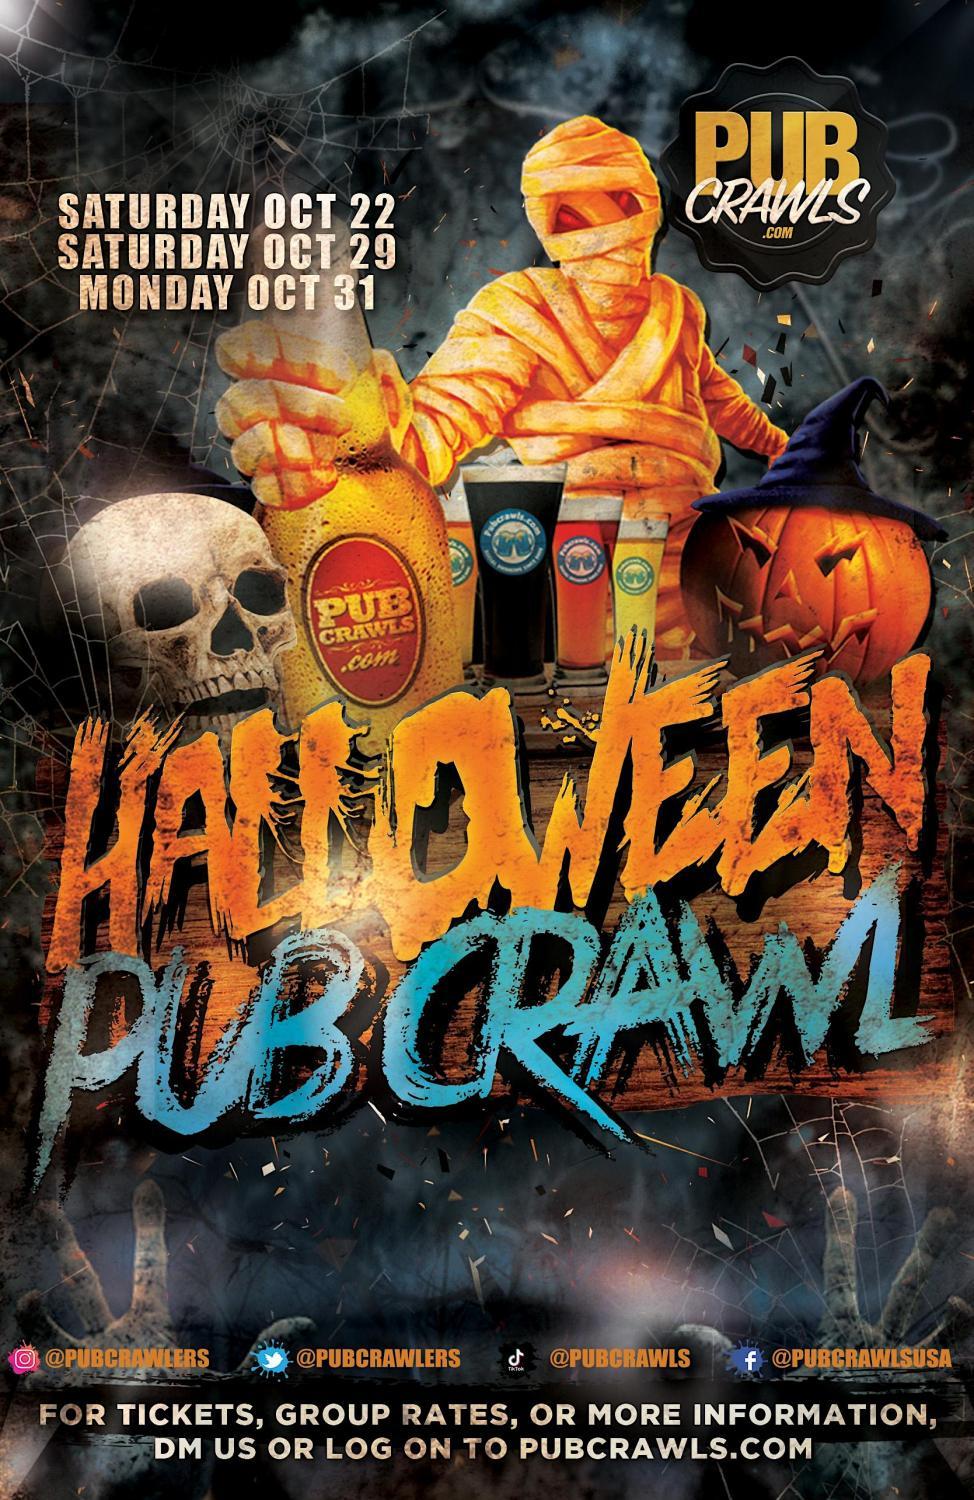 Fort Worth Happy Hour Halloween Bar Crawl
Sat Oct 22, 1:00 PM - Sat Oct 22, 8:00 PM